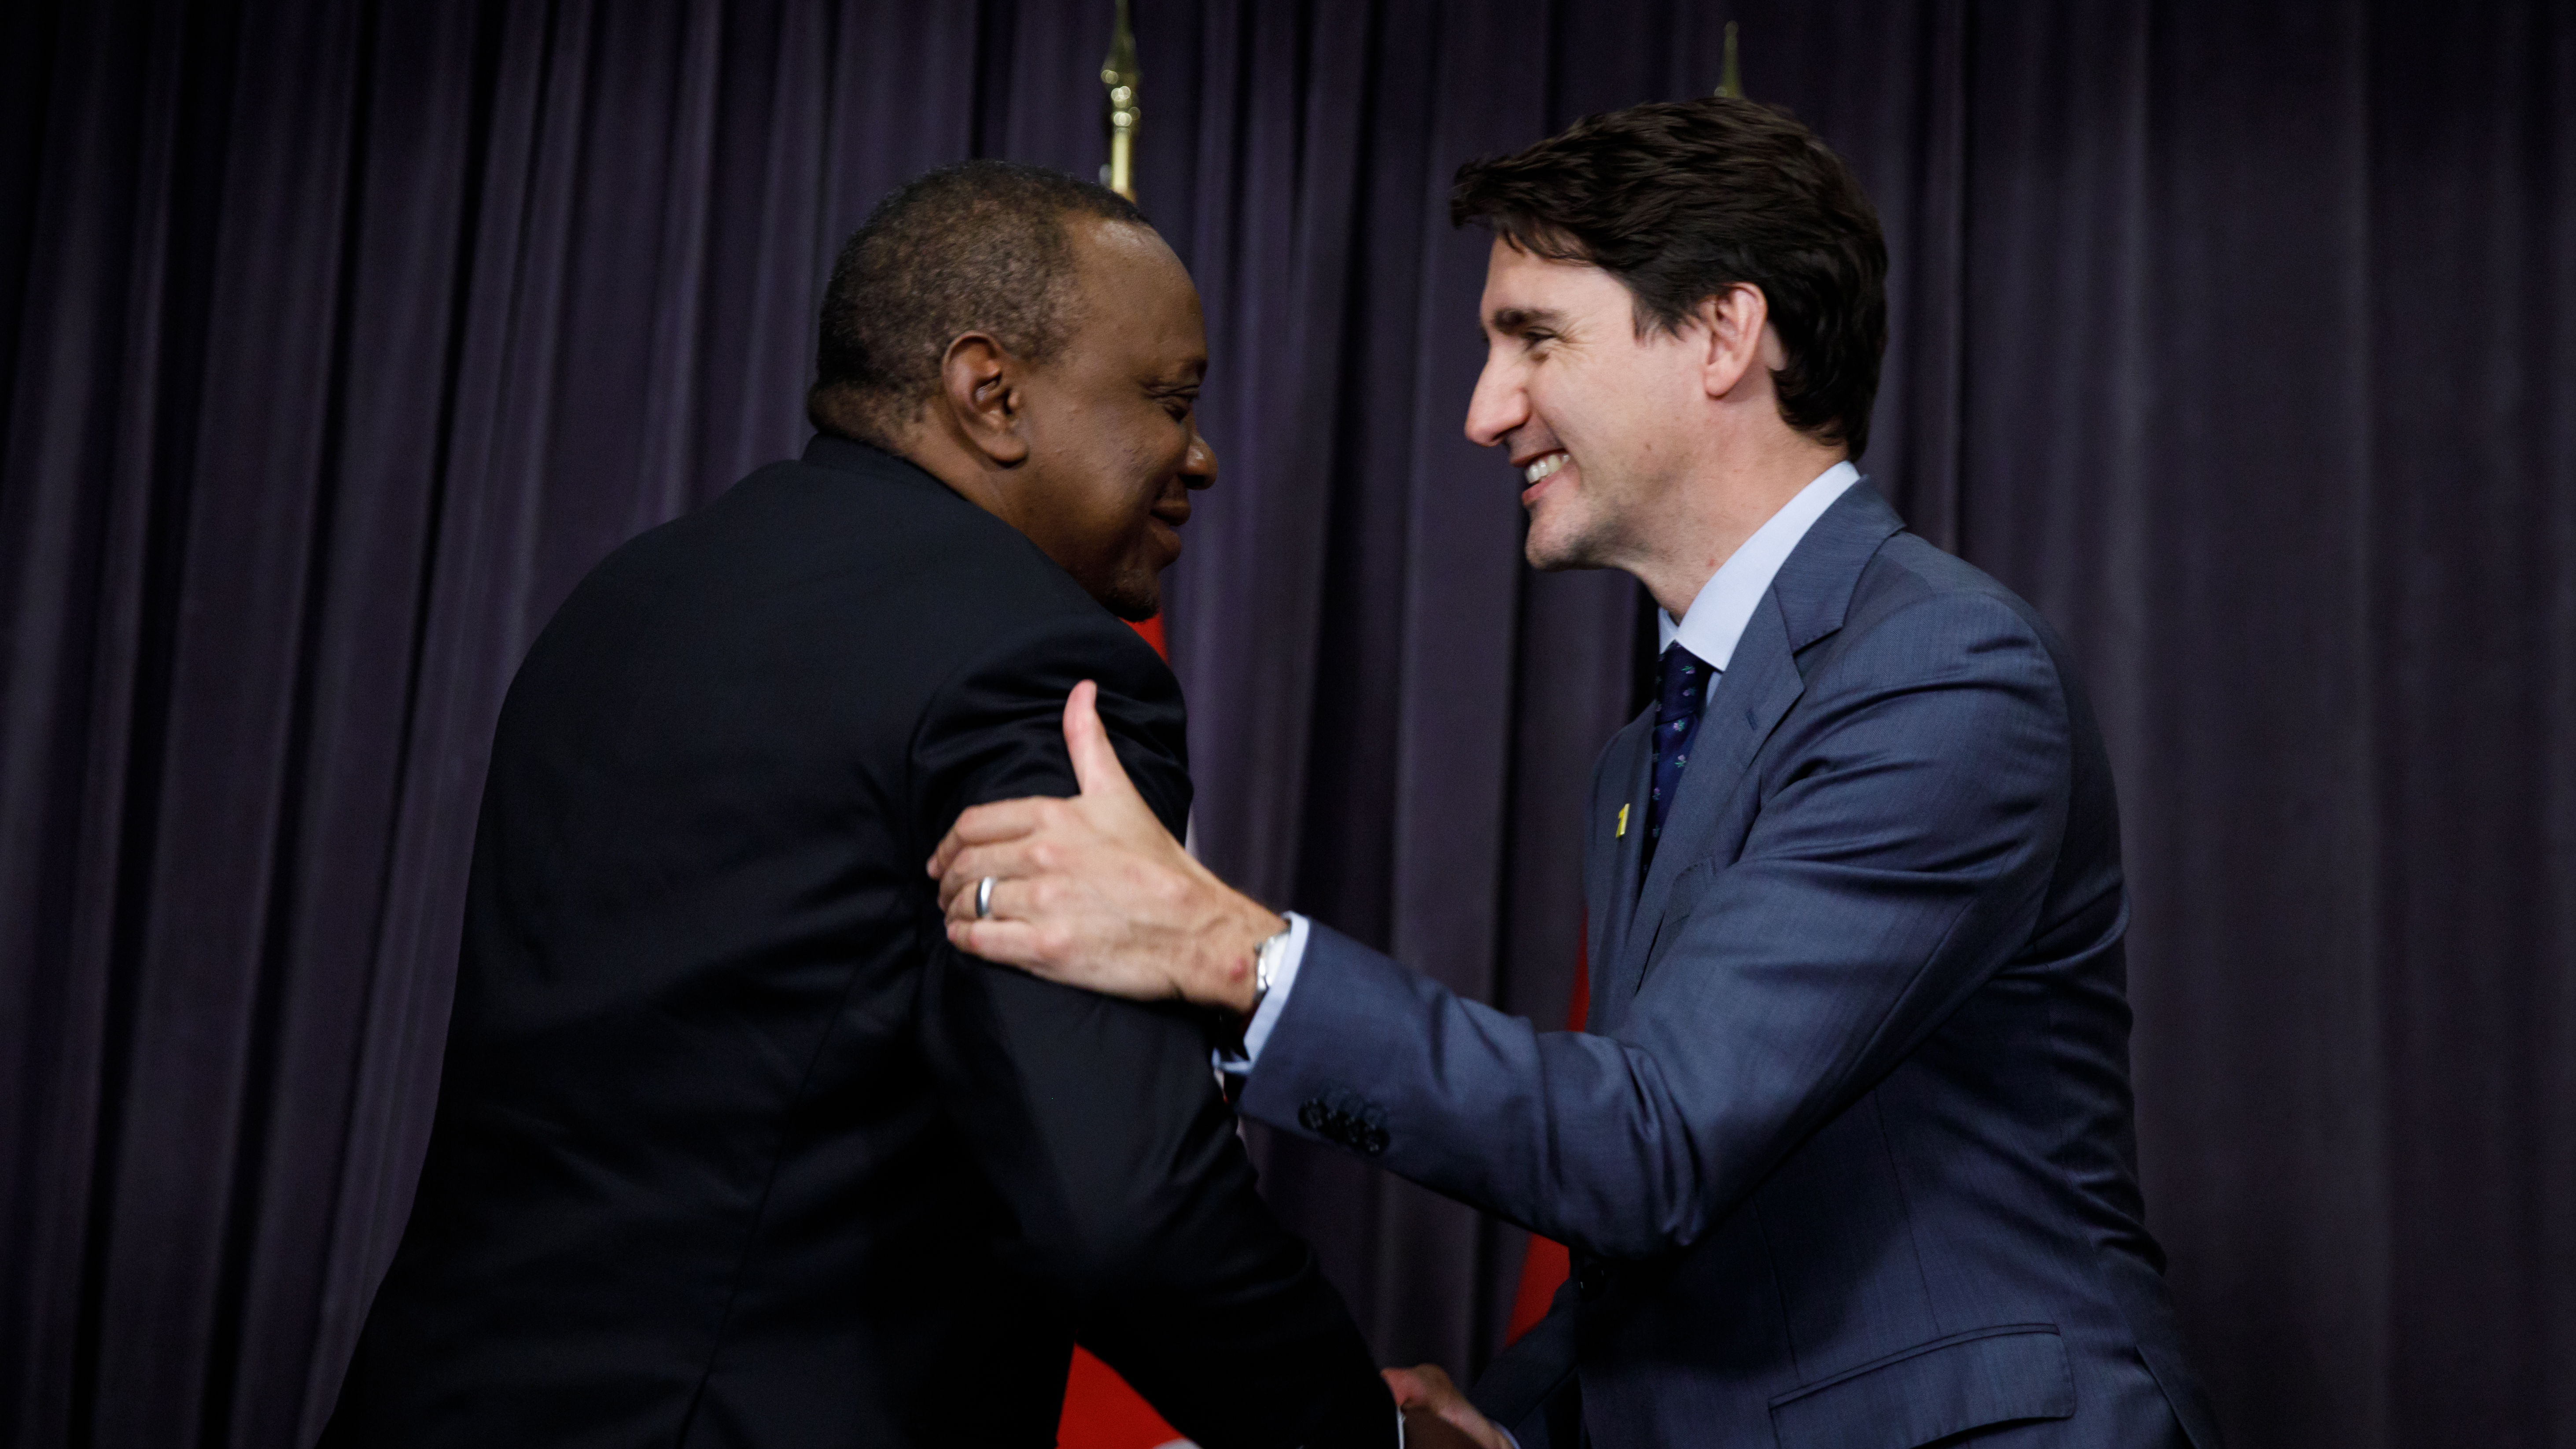 PM Trudeau meets with President Kenyatta of Kenya